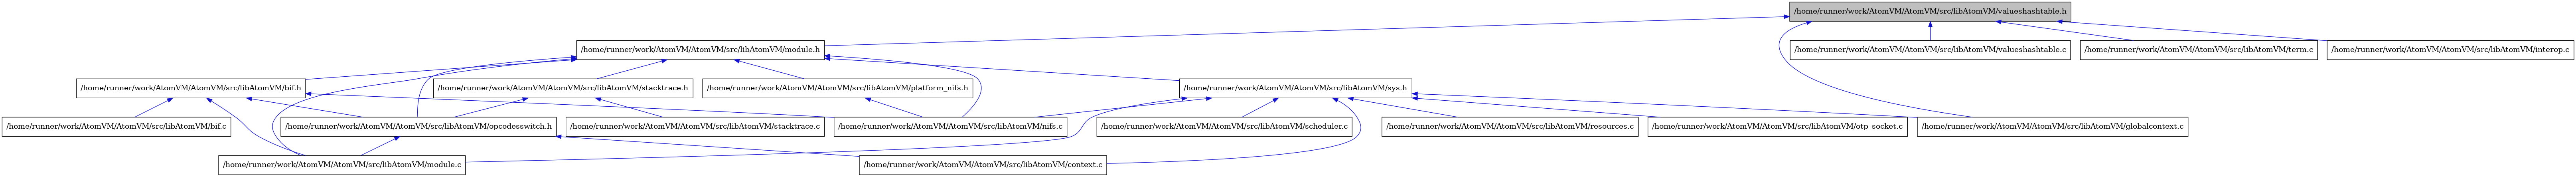 digraph {
    graph [bgcolor="#00000000"]
    node [shape=rectangle style=filled fillcolor="#FFFFFF" font=Helvetica padding=2]
    edge [color="#1414CE"]
    "6" [label="/home/runner/work/AtomVM/AtomVM/src/libAtomVM/bif.c" tooltip="/home/runner/work/AtomVM/AtomVM/src/libAtomVM/bif.c"]
    "5" [label="/home/runner/work/AtomVM/AtomVM/src/libAtomVM/bif.h" tooltip="/home/runner/work/AtomVM/AtomVM/src/libAtomVM/bif.h"]
    "11" [label="/home/runner/work/AtomVM/AtomVM/src/libAtomVM/platform_nifs.h" tooltip="/home/runner/work/AtomVM/AtomVM/src/libAtomVM/platform_nifs.h"]
    "19" [label="/home/runner/work/AtomVM/AtomVM/src/libAtomVM/valueshashtable.c" tooltip="/home/runner/work/AtomVM/AtomVM/src/libAtomVM/valueshashtable.c"]
    "1" [label="/home/runner/work/AtomVM/AtomVM/src/libAtomVM/valueshashtable.h" tooltip="/home/runner/work/AtomVM/AtomVM/src/libAtomVM/valueshashtable.h" fillcolor="#BFBFBF"]
    "17" [label="/home/runner/work/AtomVM/AtomVM/src/libAtomVM/scheduler.c" tooltip="/home/runner/work/AtomVM/AtomVM/src/libAtomVM/scheduler.c"]
    "10" [label="/home/runner/work/AtomVM/AtomVM/src/libAtomVM/context.c" tooltip="/home/runner/work/AtomVM/AtomVM/src/libAtomVM/context.c"]
    "13" [label="/home/runner/work/AtomVM/AtomVM/src/libAtomVM/stacktrace.c" tooltip="/home/runner/work/AtomVM/AtomVM/src/libAtomVM/stacktrace.c"]
    "12" [label="/home/runner/work/AtomVM/AtomVM/src/libAtomVM/stacktrace.h" tooltip="/home/runner/work/AtomVM/AtomVM/src/libAtomVM/stacktrace.h"]
    "7" [label="/home/runner/work/AtomVM/AtomVM/src/libAtomVM/module.c" tooltip="/home/runner/work/AtomVM/AtomVM/src/libAtomVM/module.c"]
    "4" [label="/home/runner/work/AtomVM/AtomVM/src/libAtomVM/module.h" tooltip="/home/runner/work/AtomVM/AtomVM/src/libAtomVM/module.h"]
    "18" [label="/home/runner/work/AtomVM/AtomVM/src/libAtomVM/term.c" tooltip="/home/runner/work/AtomVM/AtomVM/src/libAtomVM/term.c"]
    "3" [label="/home/runner/work/AtomVM/AtomVM/src/libAtomVM/interop.c" tooltip="/home/runner/work/AtomVM/AtomVM/src/libAtomVM/interop.c"]
    "16" [label="/home/runner/work/AtomVM/AtomVM/src/libAtomVM/resources.c" tooltip="/home/runner/work/AtomVM/AtomVM/src/libAtomVM/resources.c"]
    "14" [label="/home/runner/work/AtomVM/AtomVM/src/libAtomVM/sys.h" tooltip="/home/runner/work/AtomVM/AtomVM/src/libAtomVM/sys.h"]
    "8" [label="/home/runner/work/AtomVM/AtomVM/src/libAtomVM/nifs.c" tooltip="/home/runner/work/AtomVM/AtomVM/src/libAtomVM/nifs.c"]
    "9" [label="/home/runner/work/AtomVM/AtomVM/src/libAtomVM/opcodesswitch.h" tooltip="/home/runner/work/AtomVM/AtomVM/src/libAtomVM/opcodesswitch.h"]
    "2" [label="/home/runner/work/AtomVM/AtomVM/src/libAtomVM/globalcontext.c" tooltip="/home/runner/work/AtomVM/AtomVM/src/libAtomVM/globalcontext.c"]
    "15" [label="/home/runner/work/AtomVM/AtomVM/src/libAtomVM/otp_socket.c" tooltip="/home/runner/work/AtomVM/AtomVM/src/libAtomVM/otp_socket.c"]
    "5" -> "6" [dir=back tooltip="include"]
    "5" -> "7" [dir=back tooltip="include"]
    "5" -> "8" [dir=back tooltip="include"]
    "5" -> "9" [dir=back tooltip="include"]
    "11" -> "8" [dir=back tooltip="include"]
    "1" -> "2" [dir=back tooltip="include"]
    "1" -> "3" [dir=back tooltip="include"]
    "1" -> "4" [dir=back tooltip="include"]
    "1" -> "18" [dir=back tooltip="include"]
    "1" -> "19" [dir=back tooltip="include"]
    "12" -> "9" [dir=back tooltip="include"]
    "12" -> "13" [dir=back tooltip="include"]
    "4" -> "5" [dir=back tooltip="include"]
    "4" -> "7" [dir=back tooltip="include"]
    "4" -> "8" [dir=back tooltip="include"]
    "4" -> "9" [dir=back tooltip="include"]
    "4" -> "11" [dir=back tooltip="include"]
    "4" -> "12" [dir=back tooltip="include"]
    "4" -> "14" [dir=back tooltip="include"]
    "14" -> "10" [dir=back tooltip="include"]
    "14" -> "2" [dir=back tooltip="include"]
    "14" -> "7" [dir=back tooltip="include"]
    "14" -> "8" [dir=back tooltip="include"]
    "14" -> "15" [dir=back tooltip="include"]
    "14" -> "16" [dir=back tooltip="include"]
    "14" -> "17" [dir=back tooltip="include"]
    "9" -> "10" [dir=back tooltip="include"]
    "9" -> "7" [dir=back tooltip="include"]
}